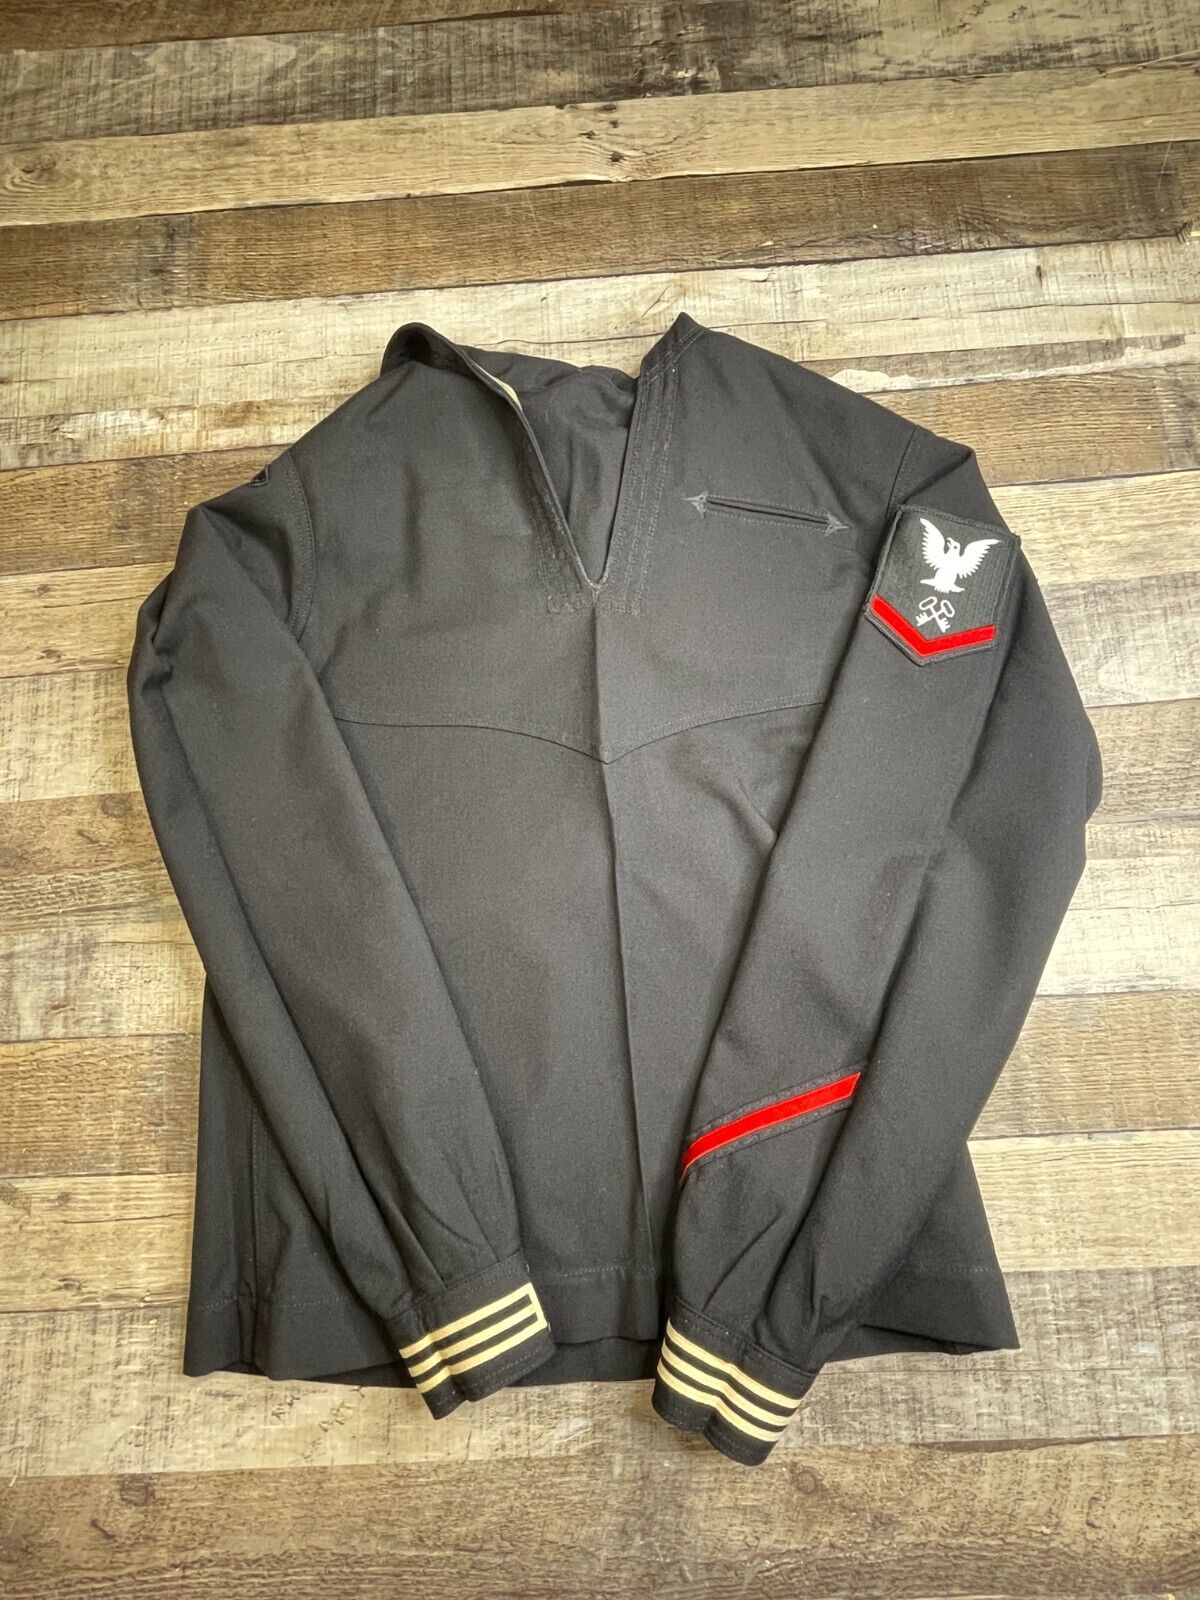 Vintage US Navy Sailor Cracker Jack Jumper Uniform Top Wool Crackerjack 40L